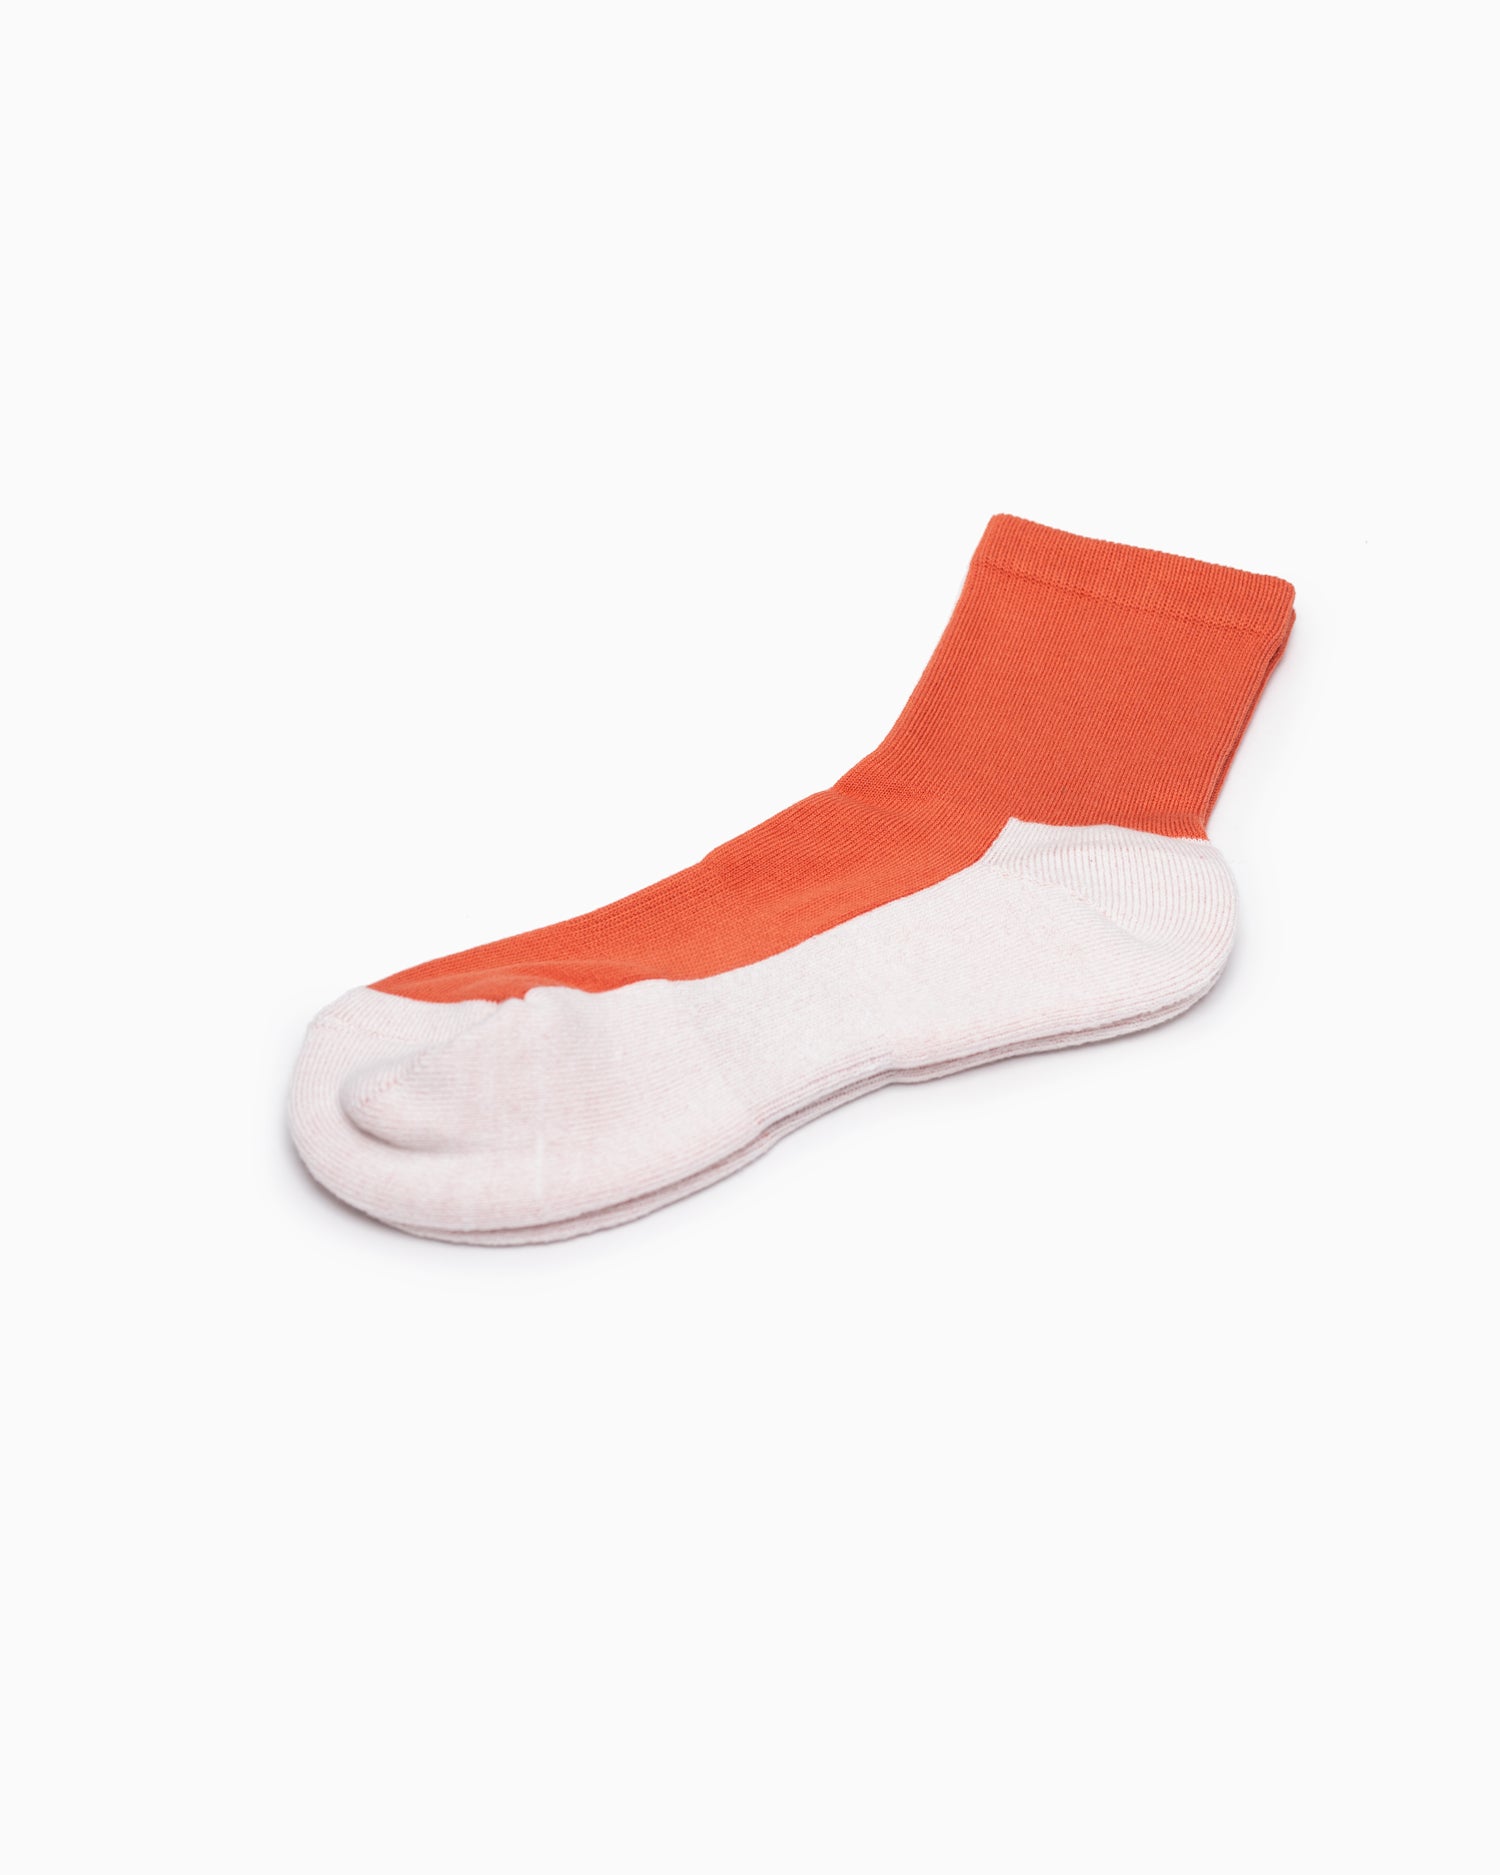 Cotton Cashmere Walk Socks - Apricot Orange